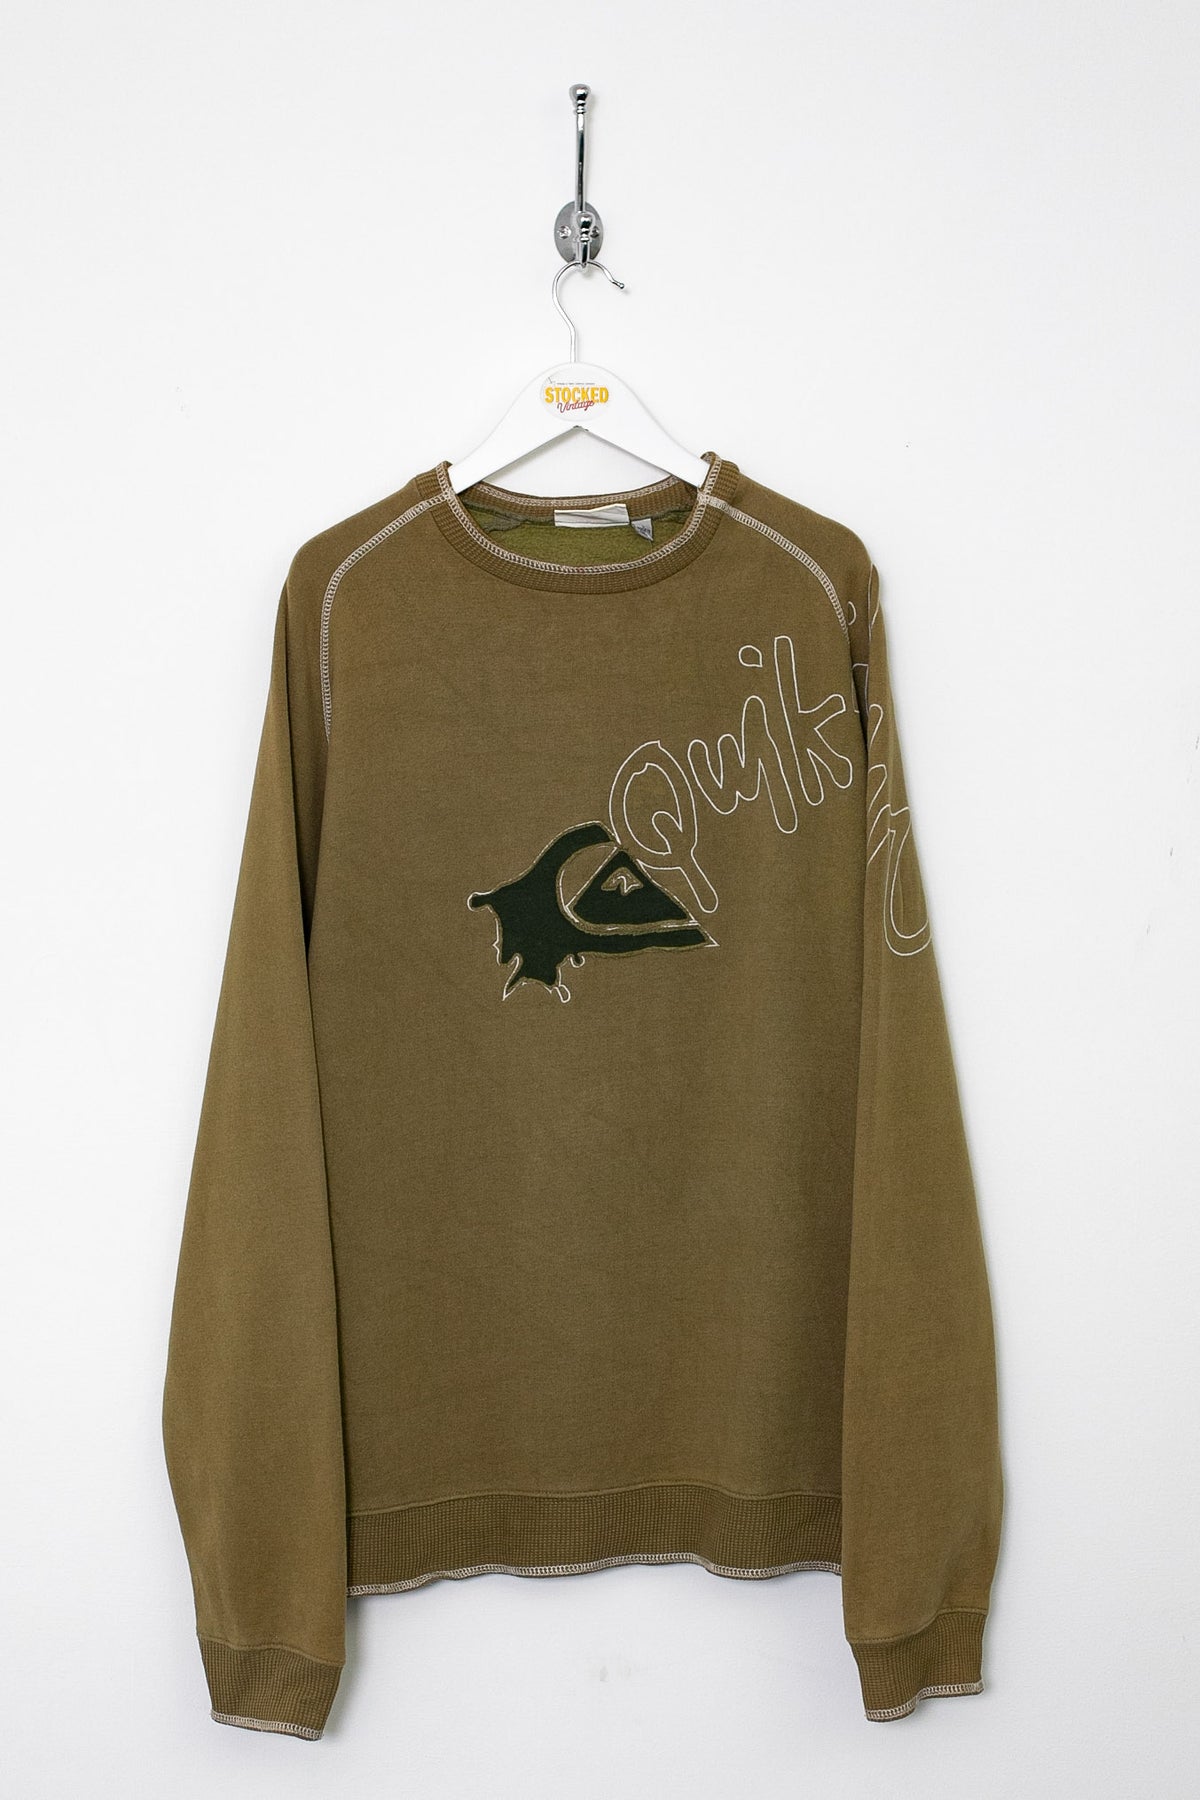 00s Quicksilver Sweatshirt (L)